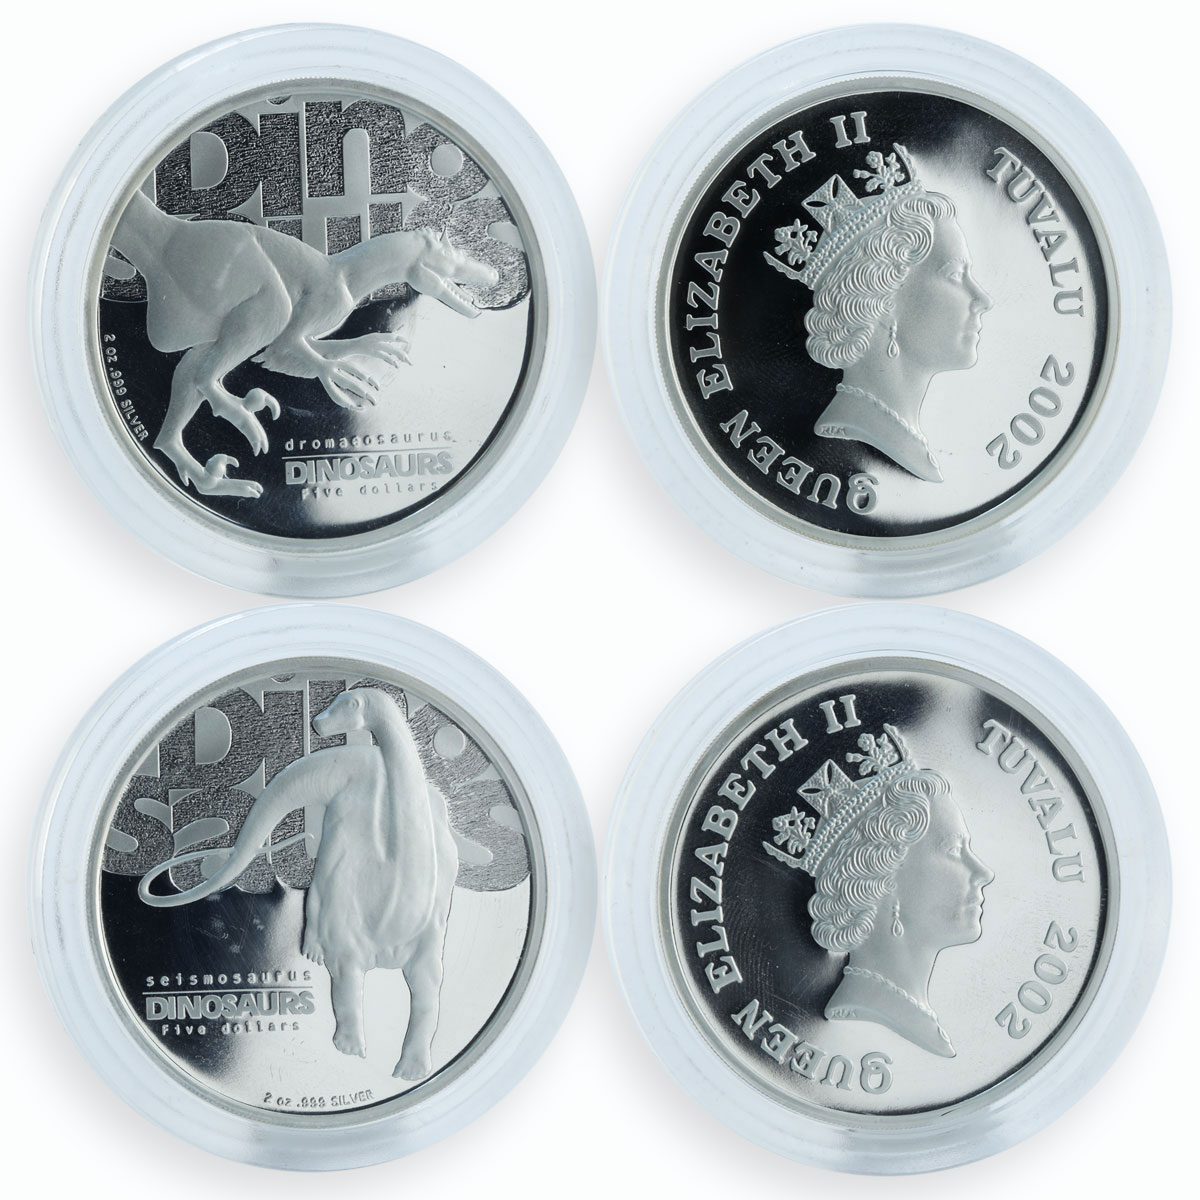 Tuvalu 5 dollars Dinosaur Series Four Silver Proof Coins Set 2 oz 2002